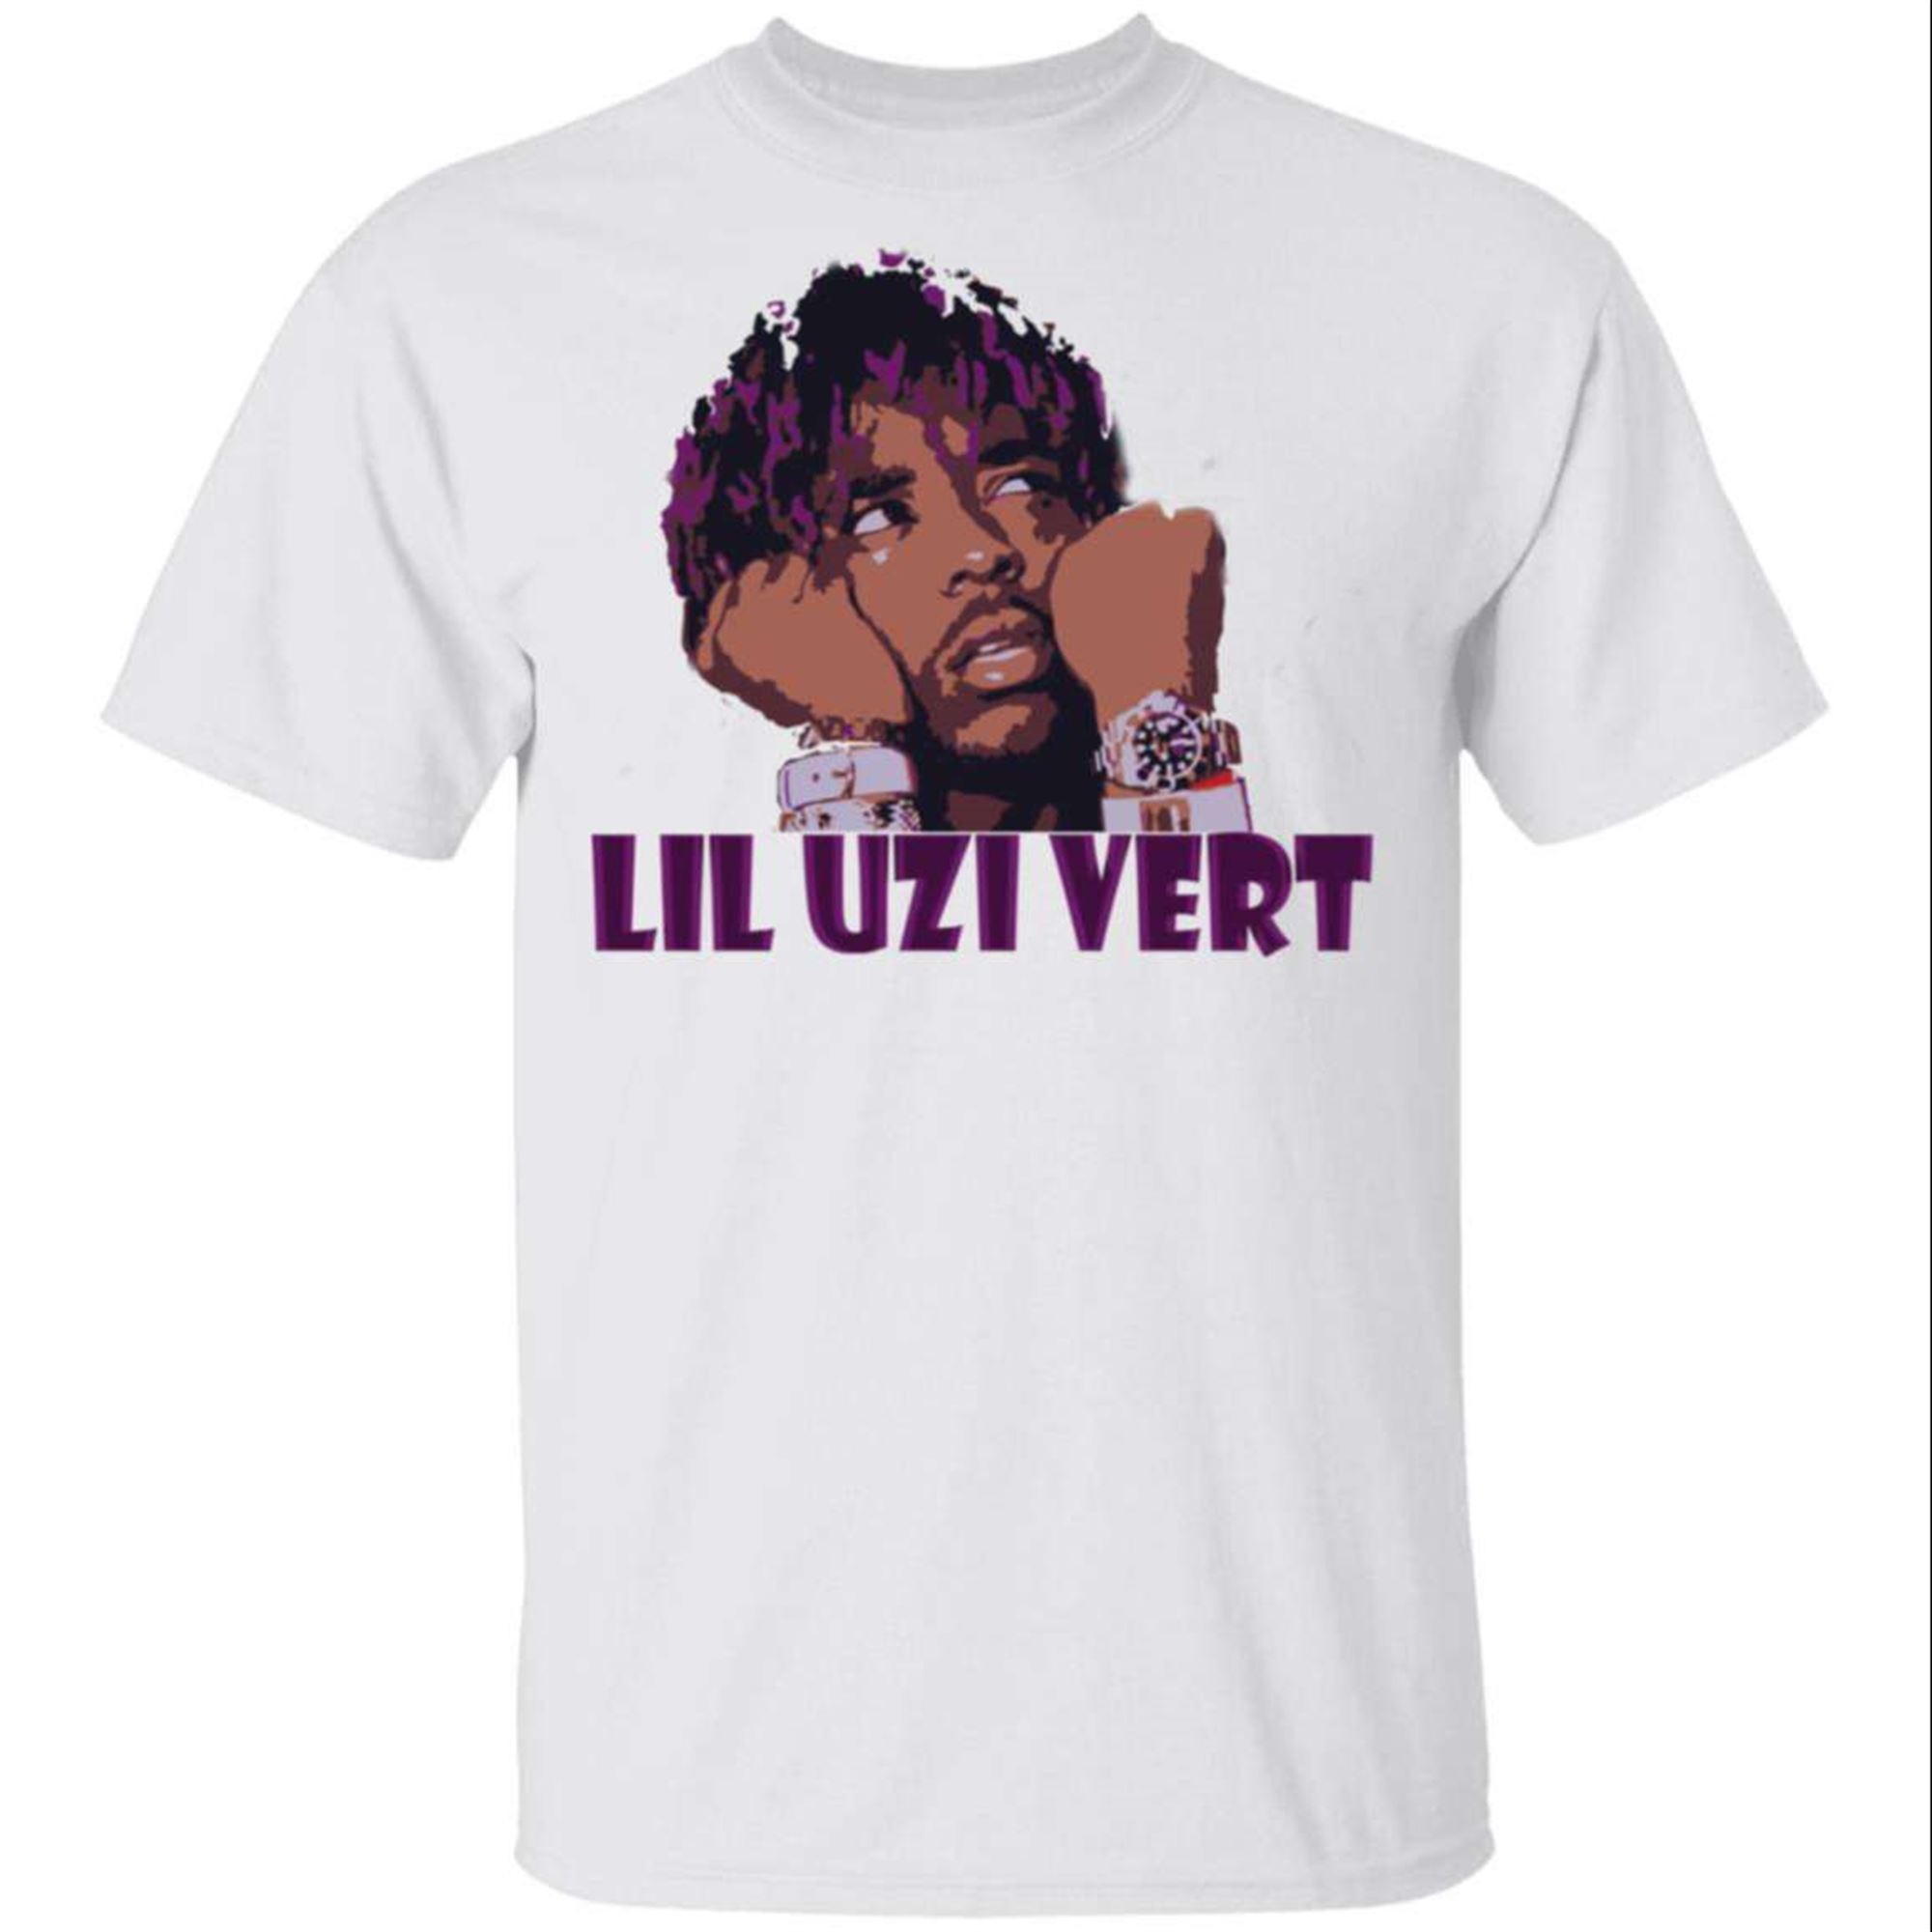 Lil Uzi Vert White T-shirt Full Size Up To 5xl